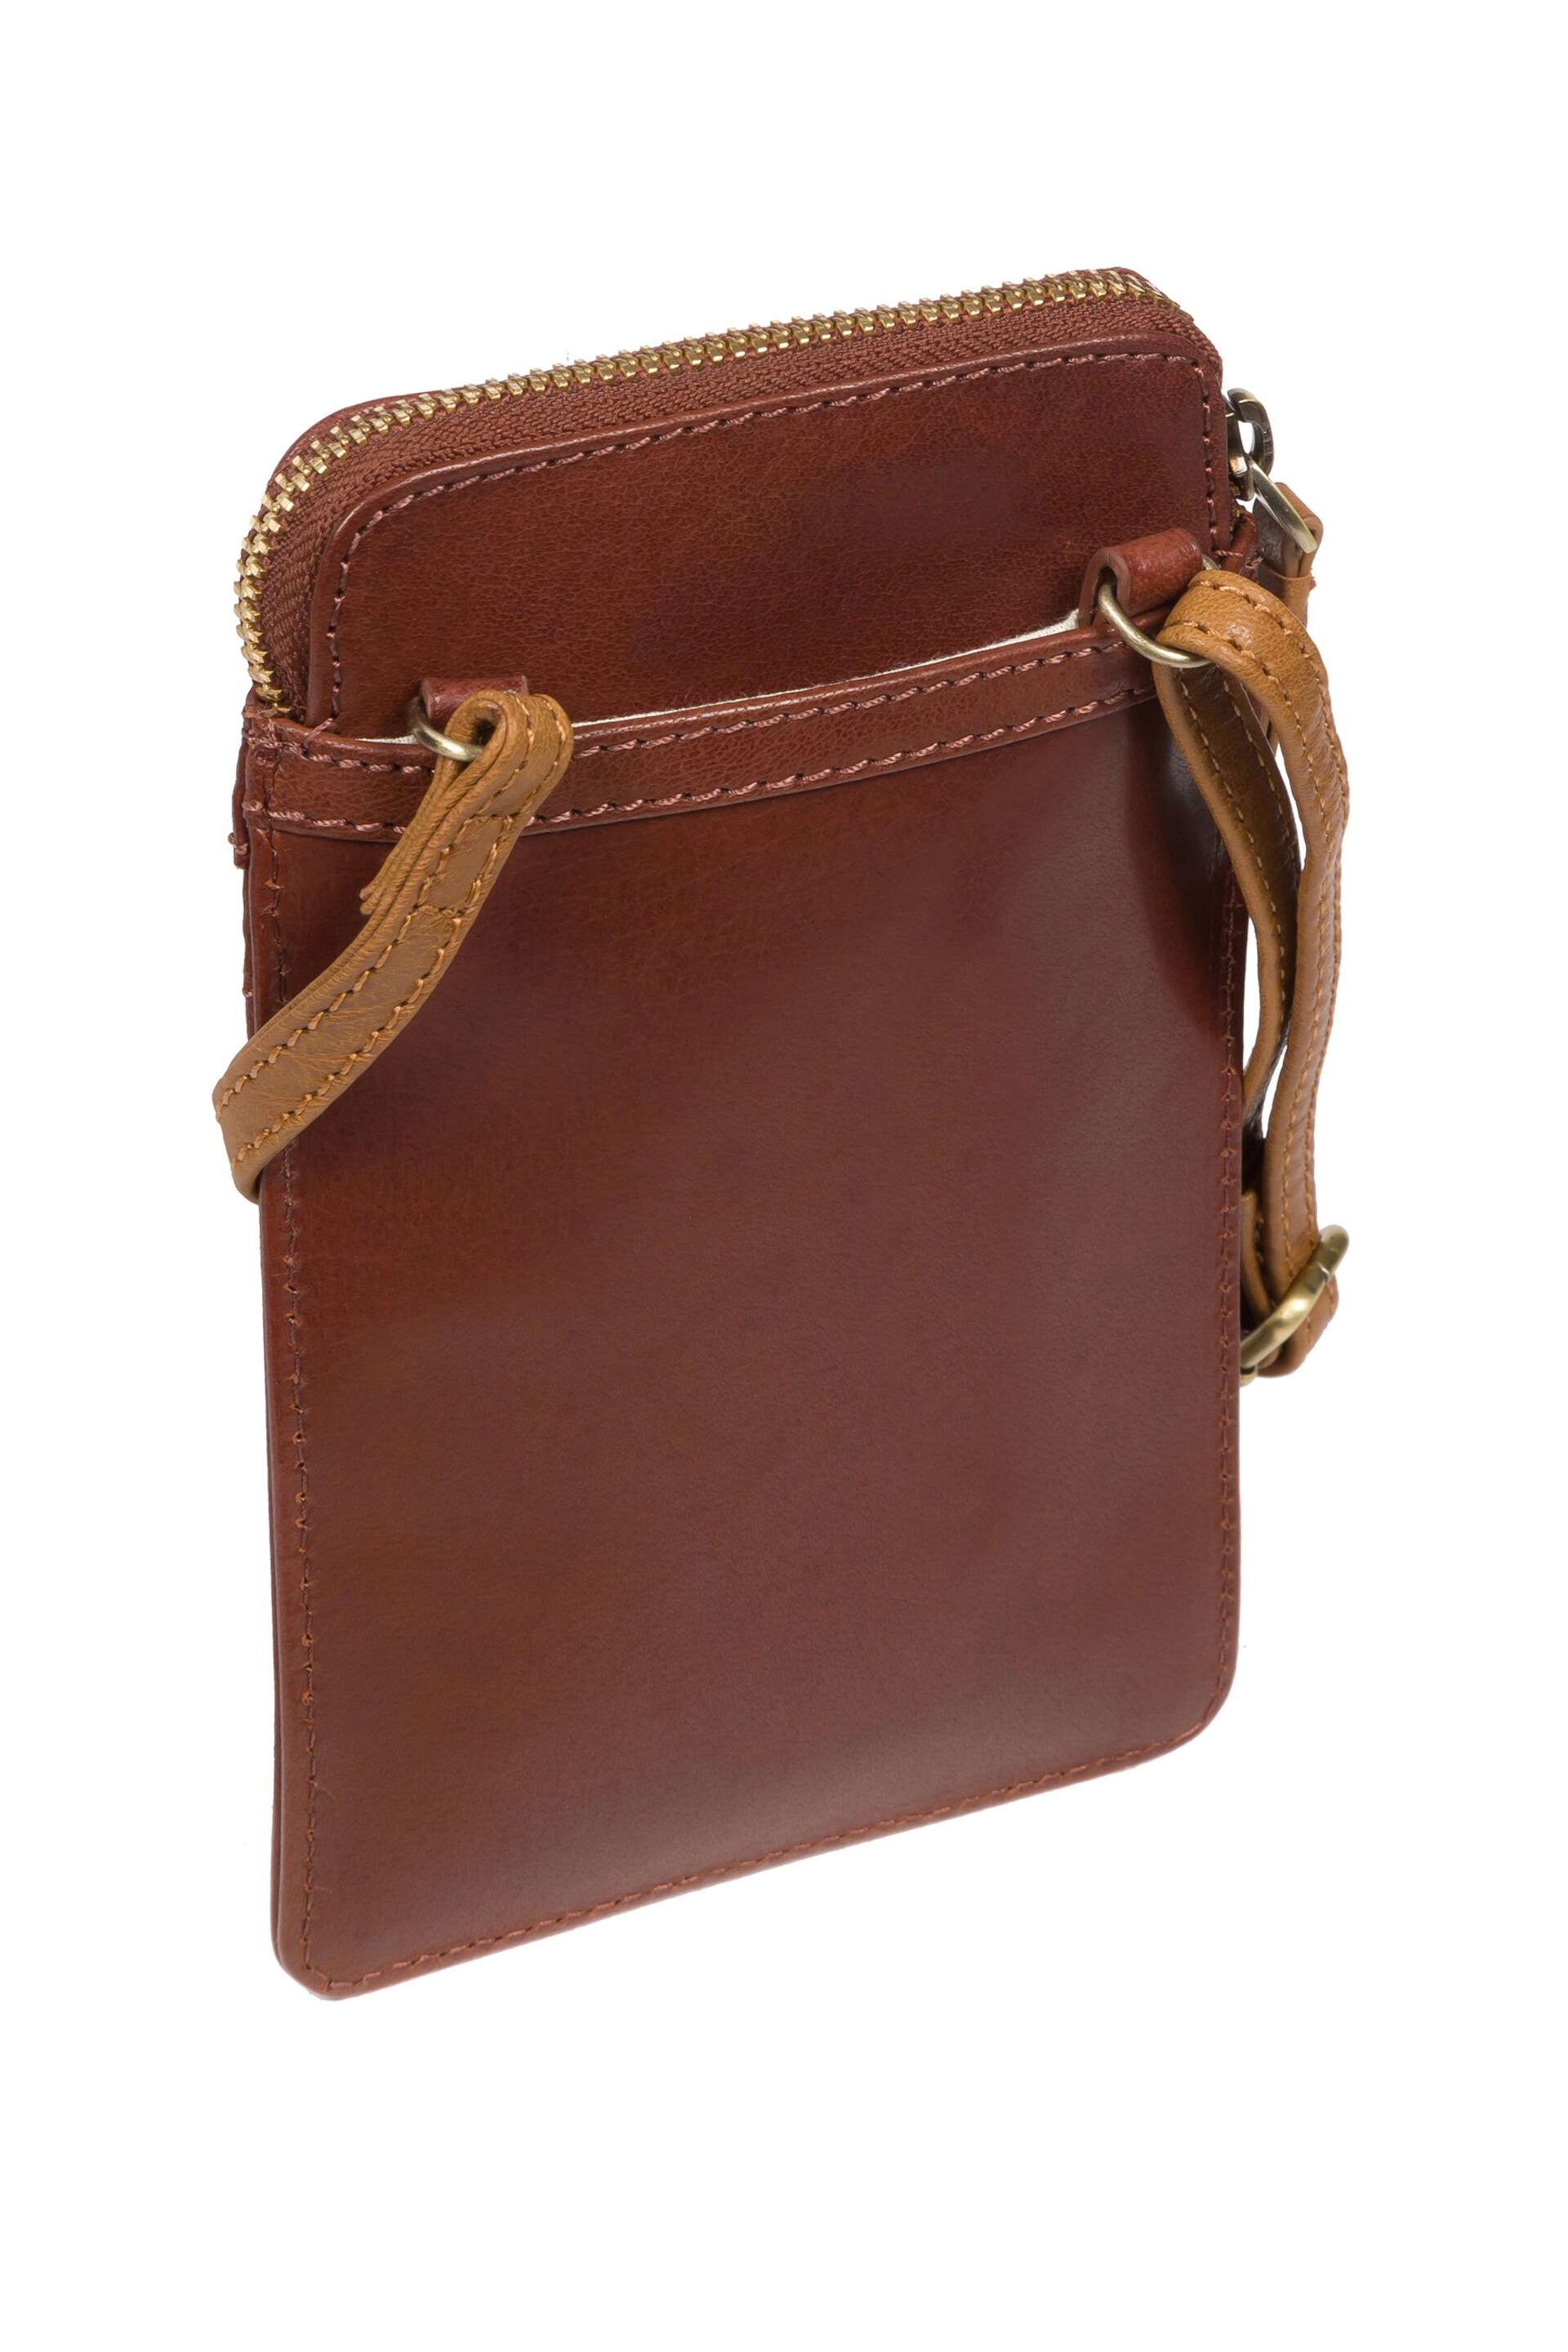 Conkca Bambino Leather Cross-Body Phone Bag - Image 3 of 4